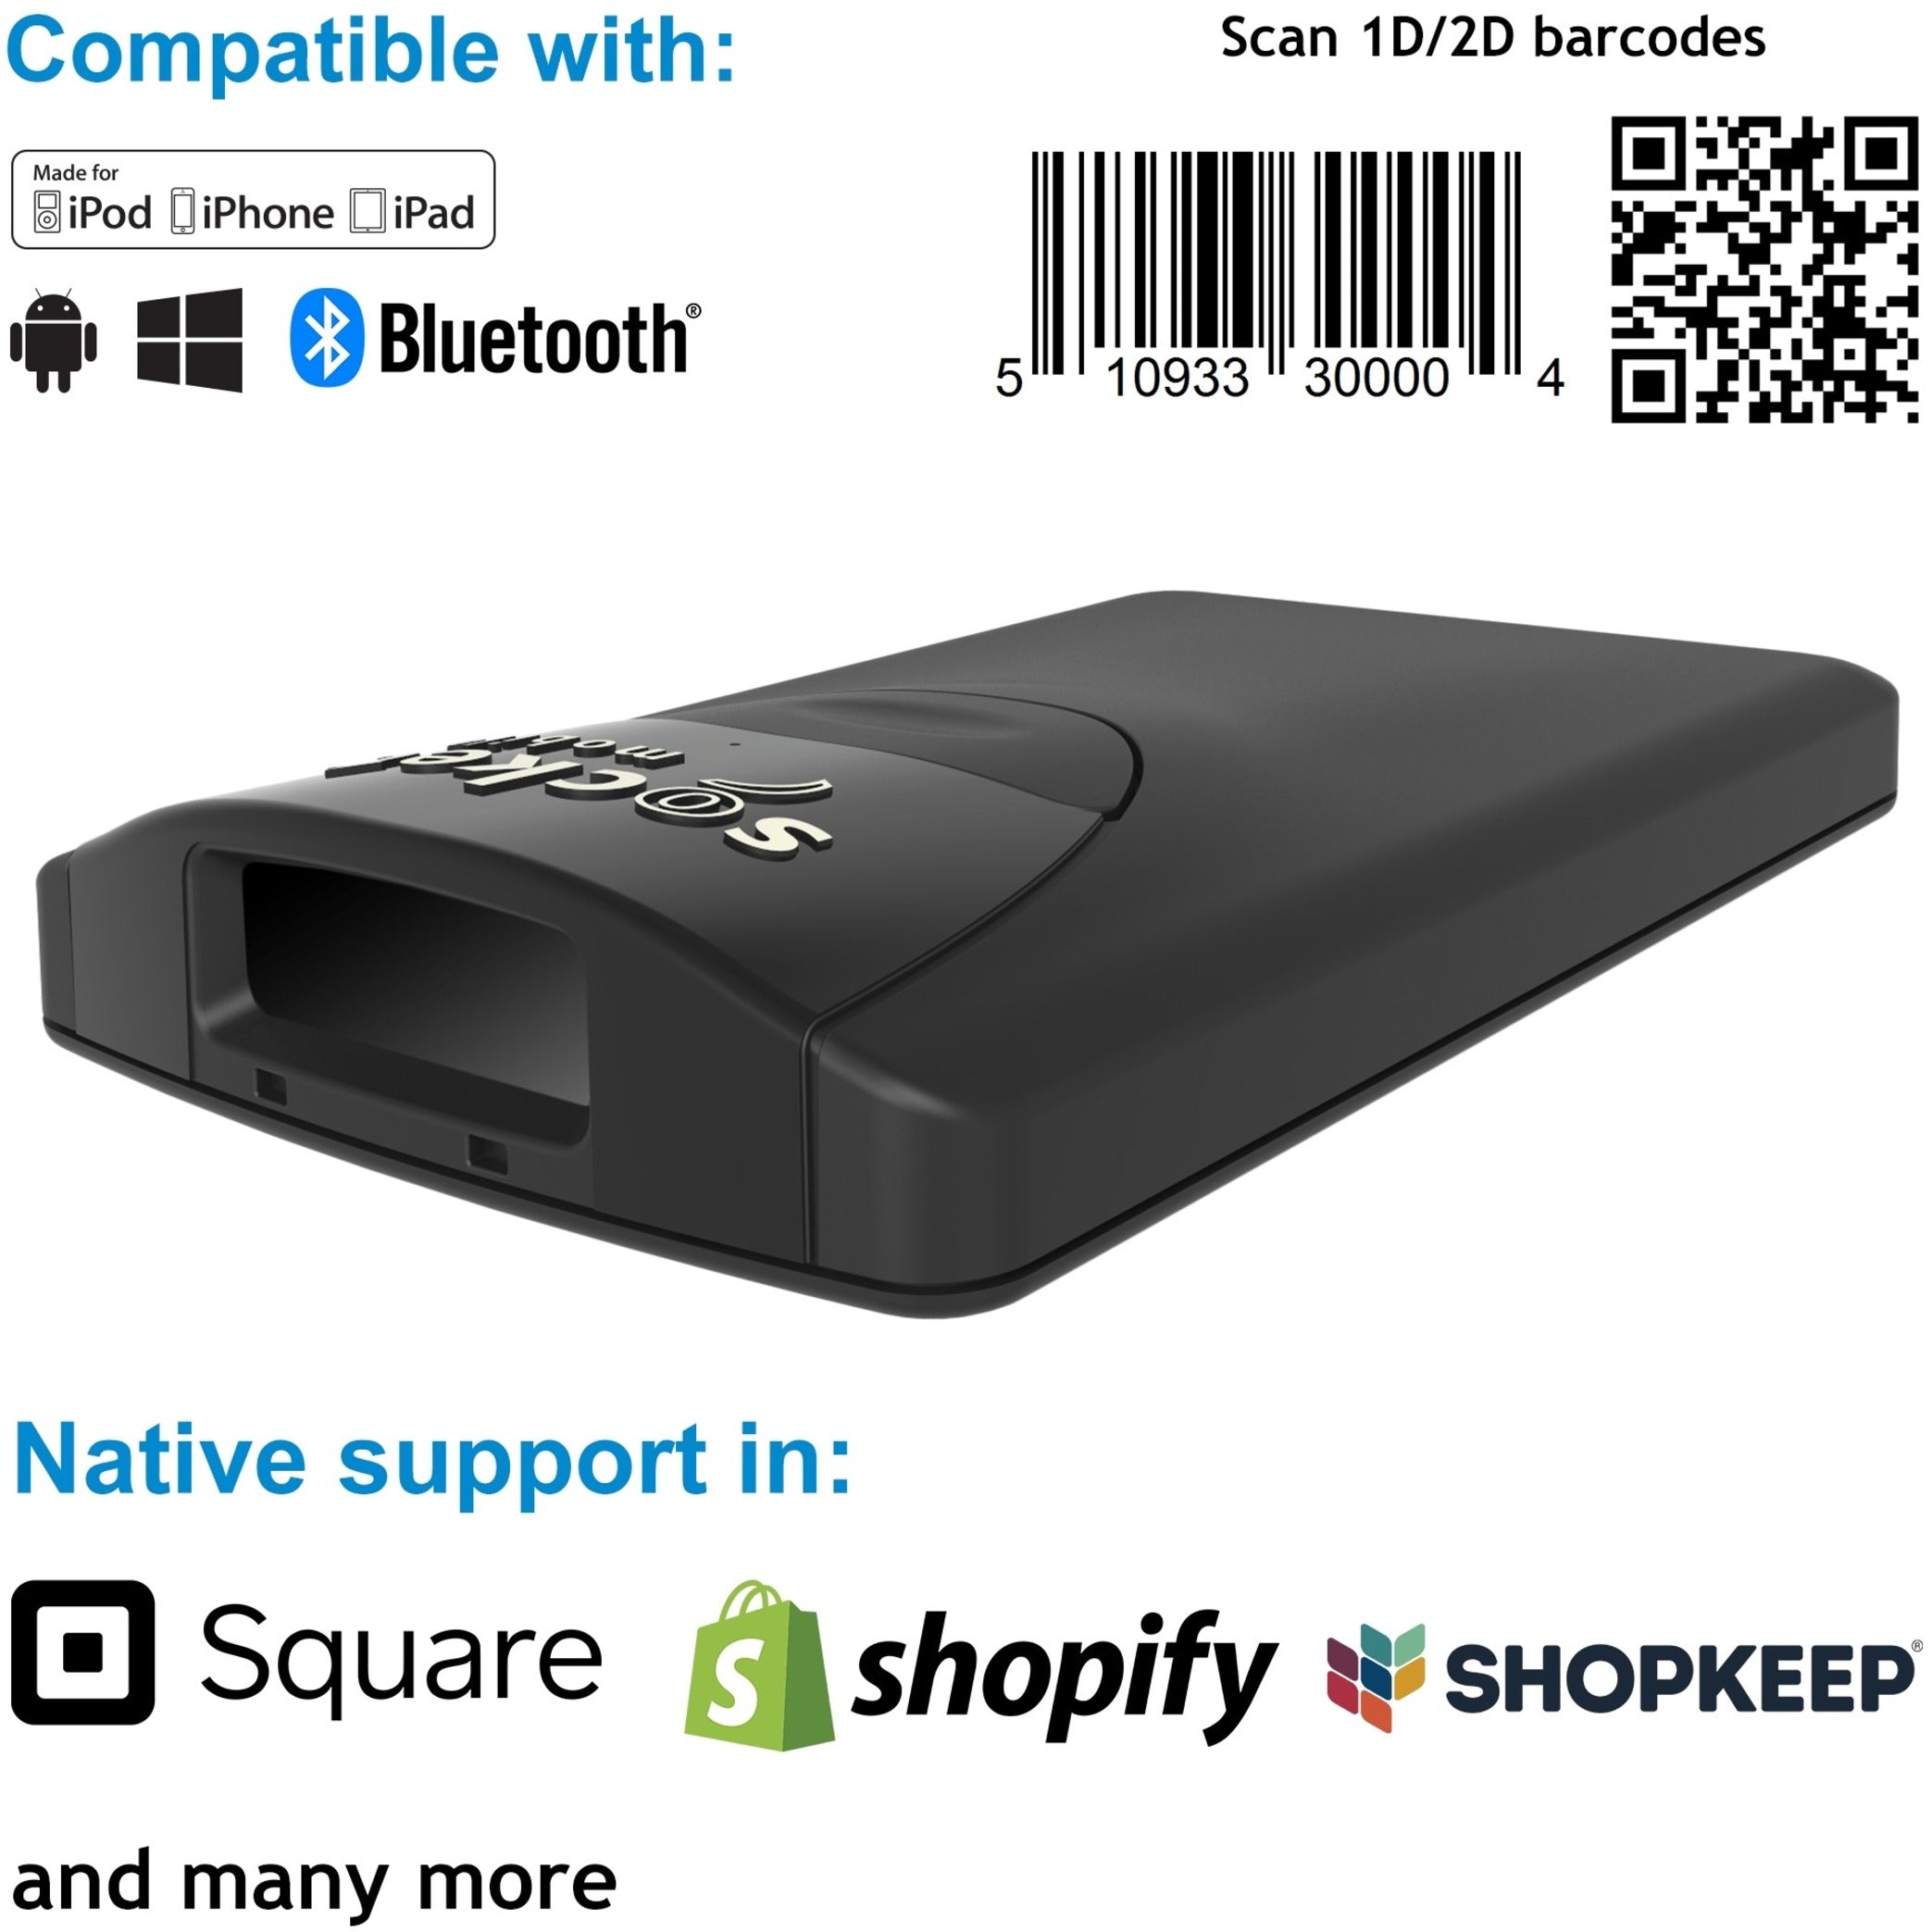 Socket Mobile CX3443-1899 SocketScan S860 Ultimate Barcode Scanner, DotCode & Travel ID Reader